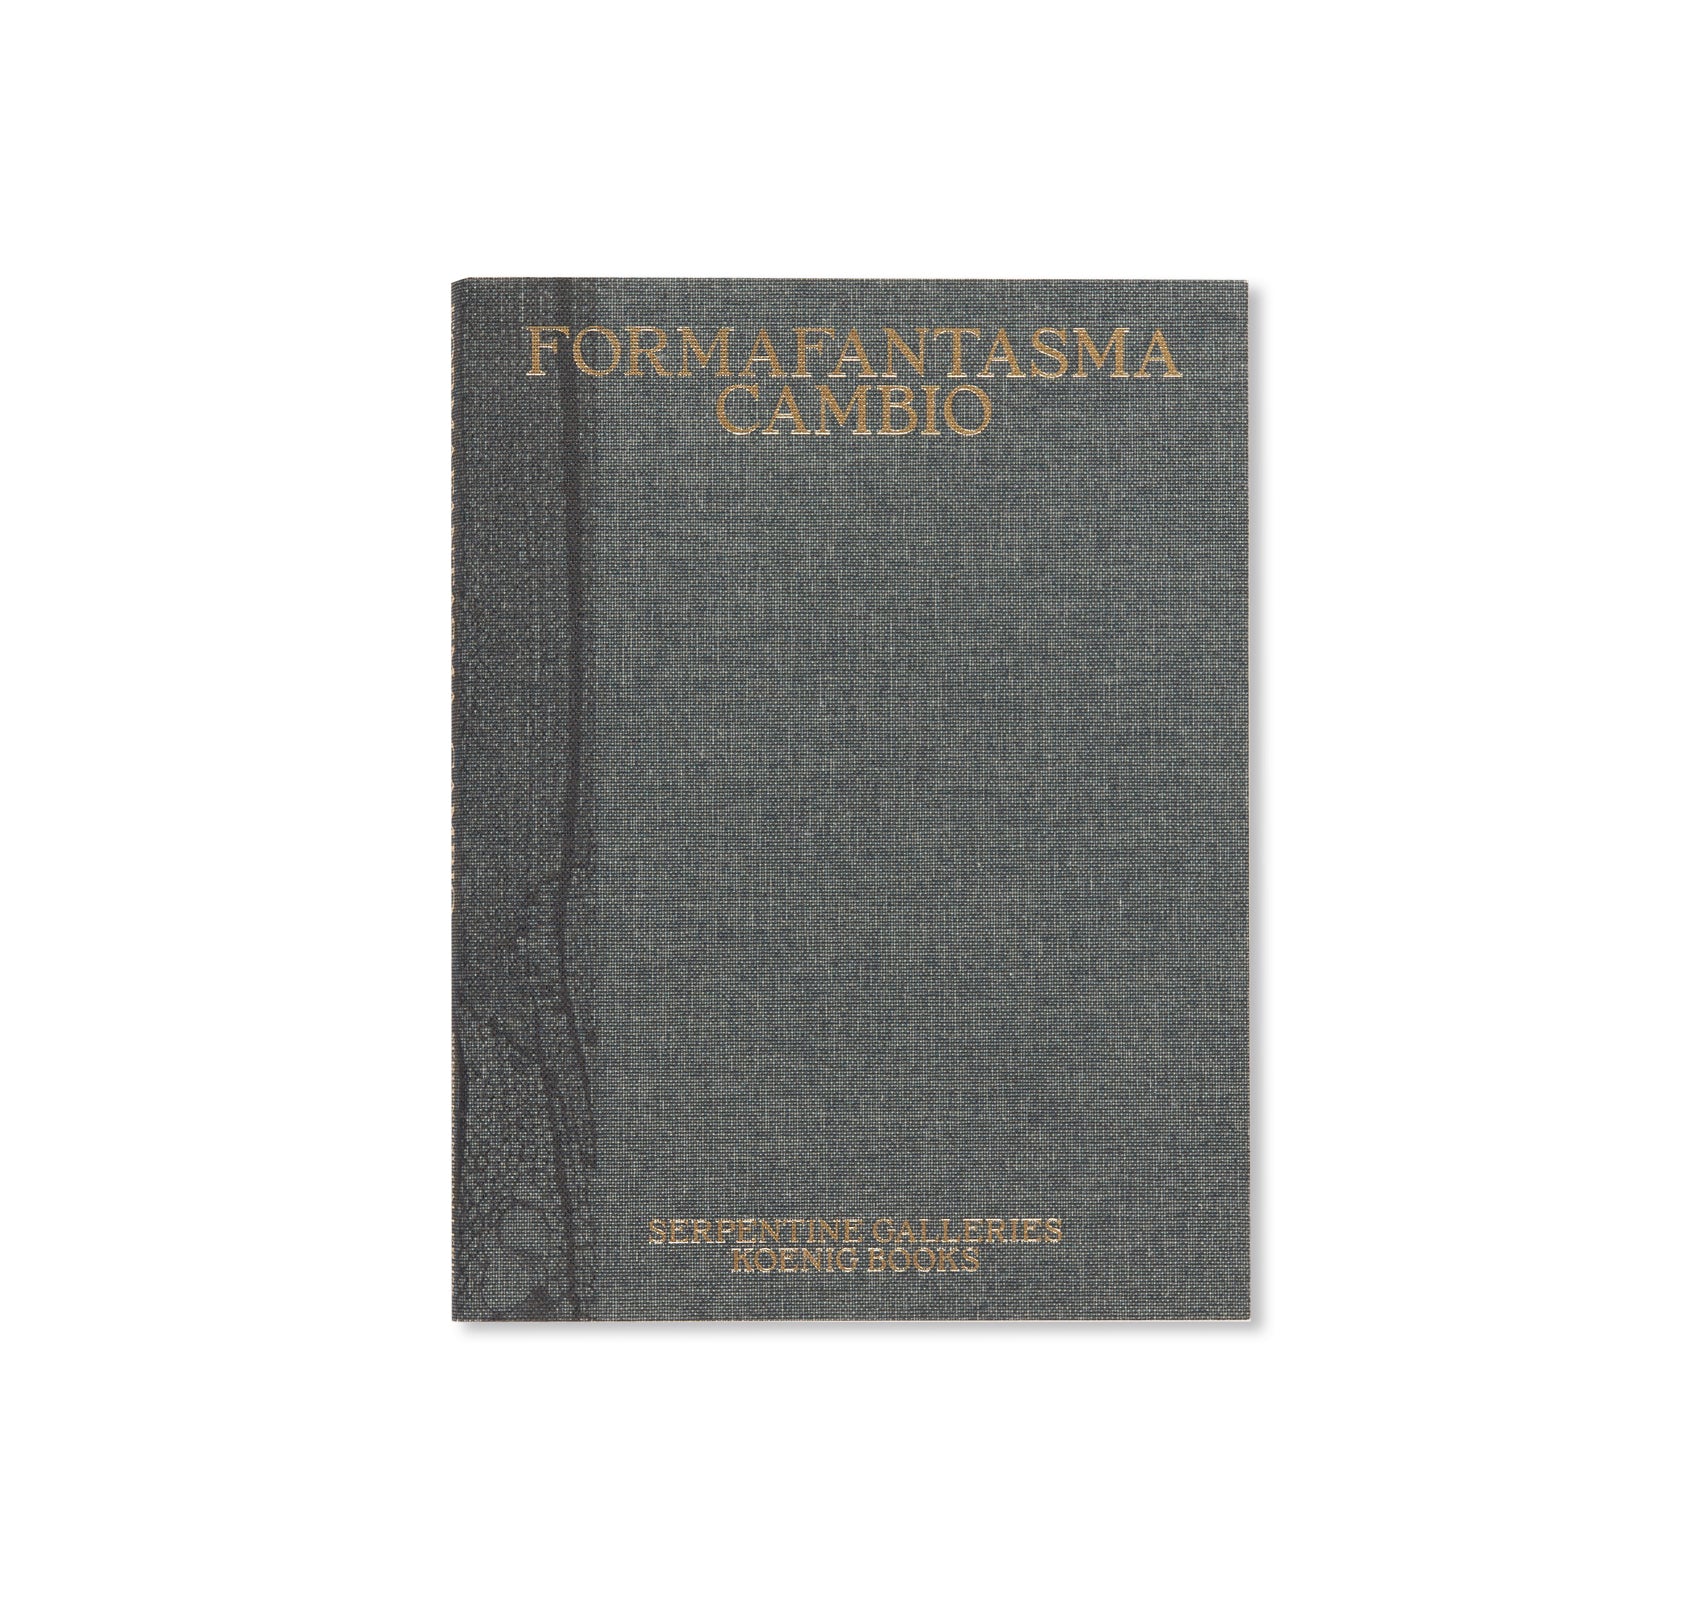 FORMAFANTASMA: CAMBIO by Formafantasma